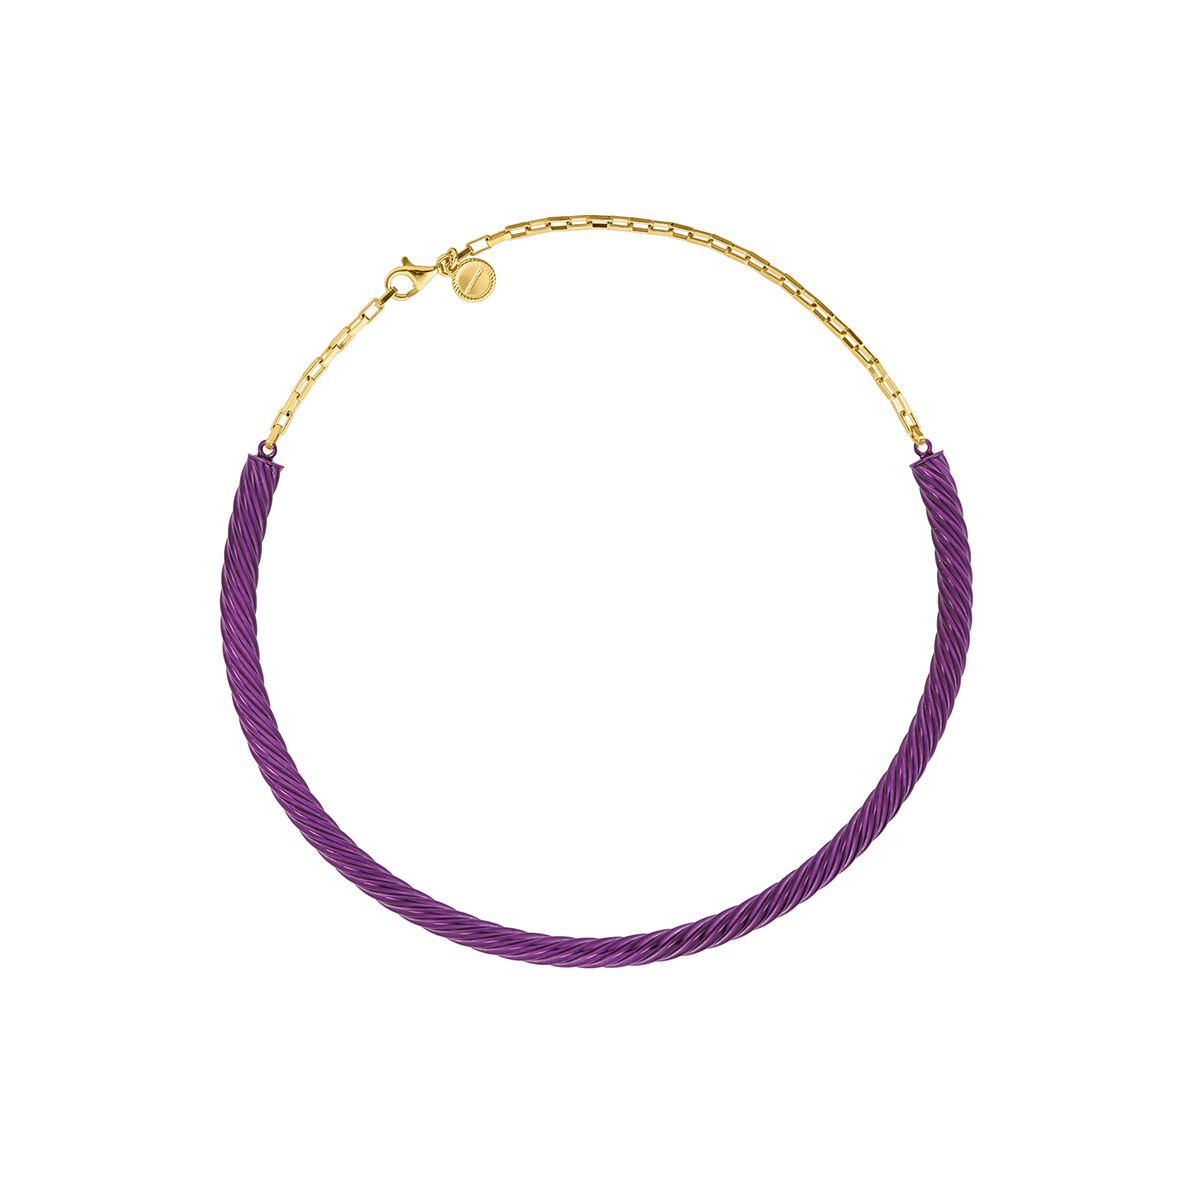 Metallic purple choker in gold-plated silver, J05044-02-PURMETAL, hi-res